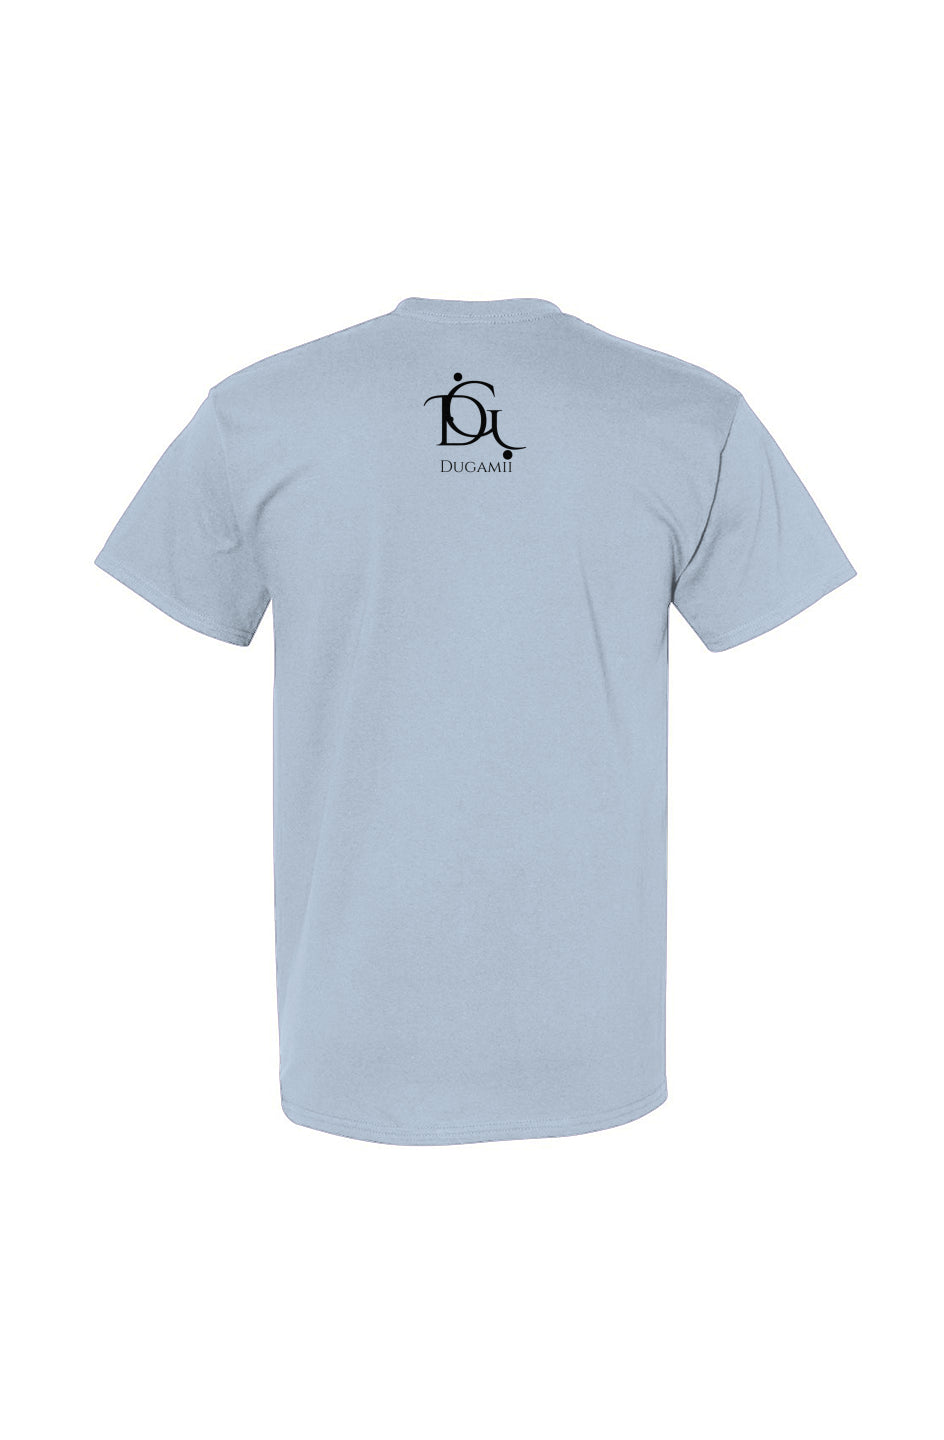 DuGamii "Distorted American Flag" Light Blue T-Shirt